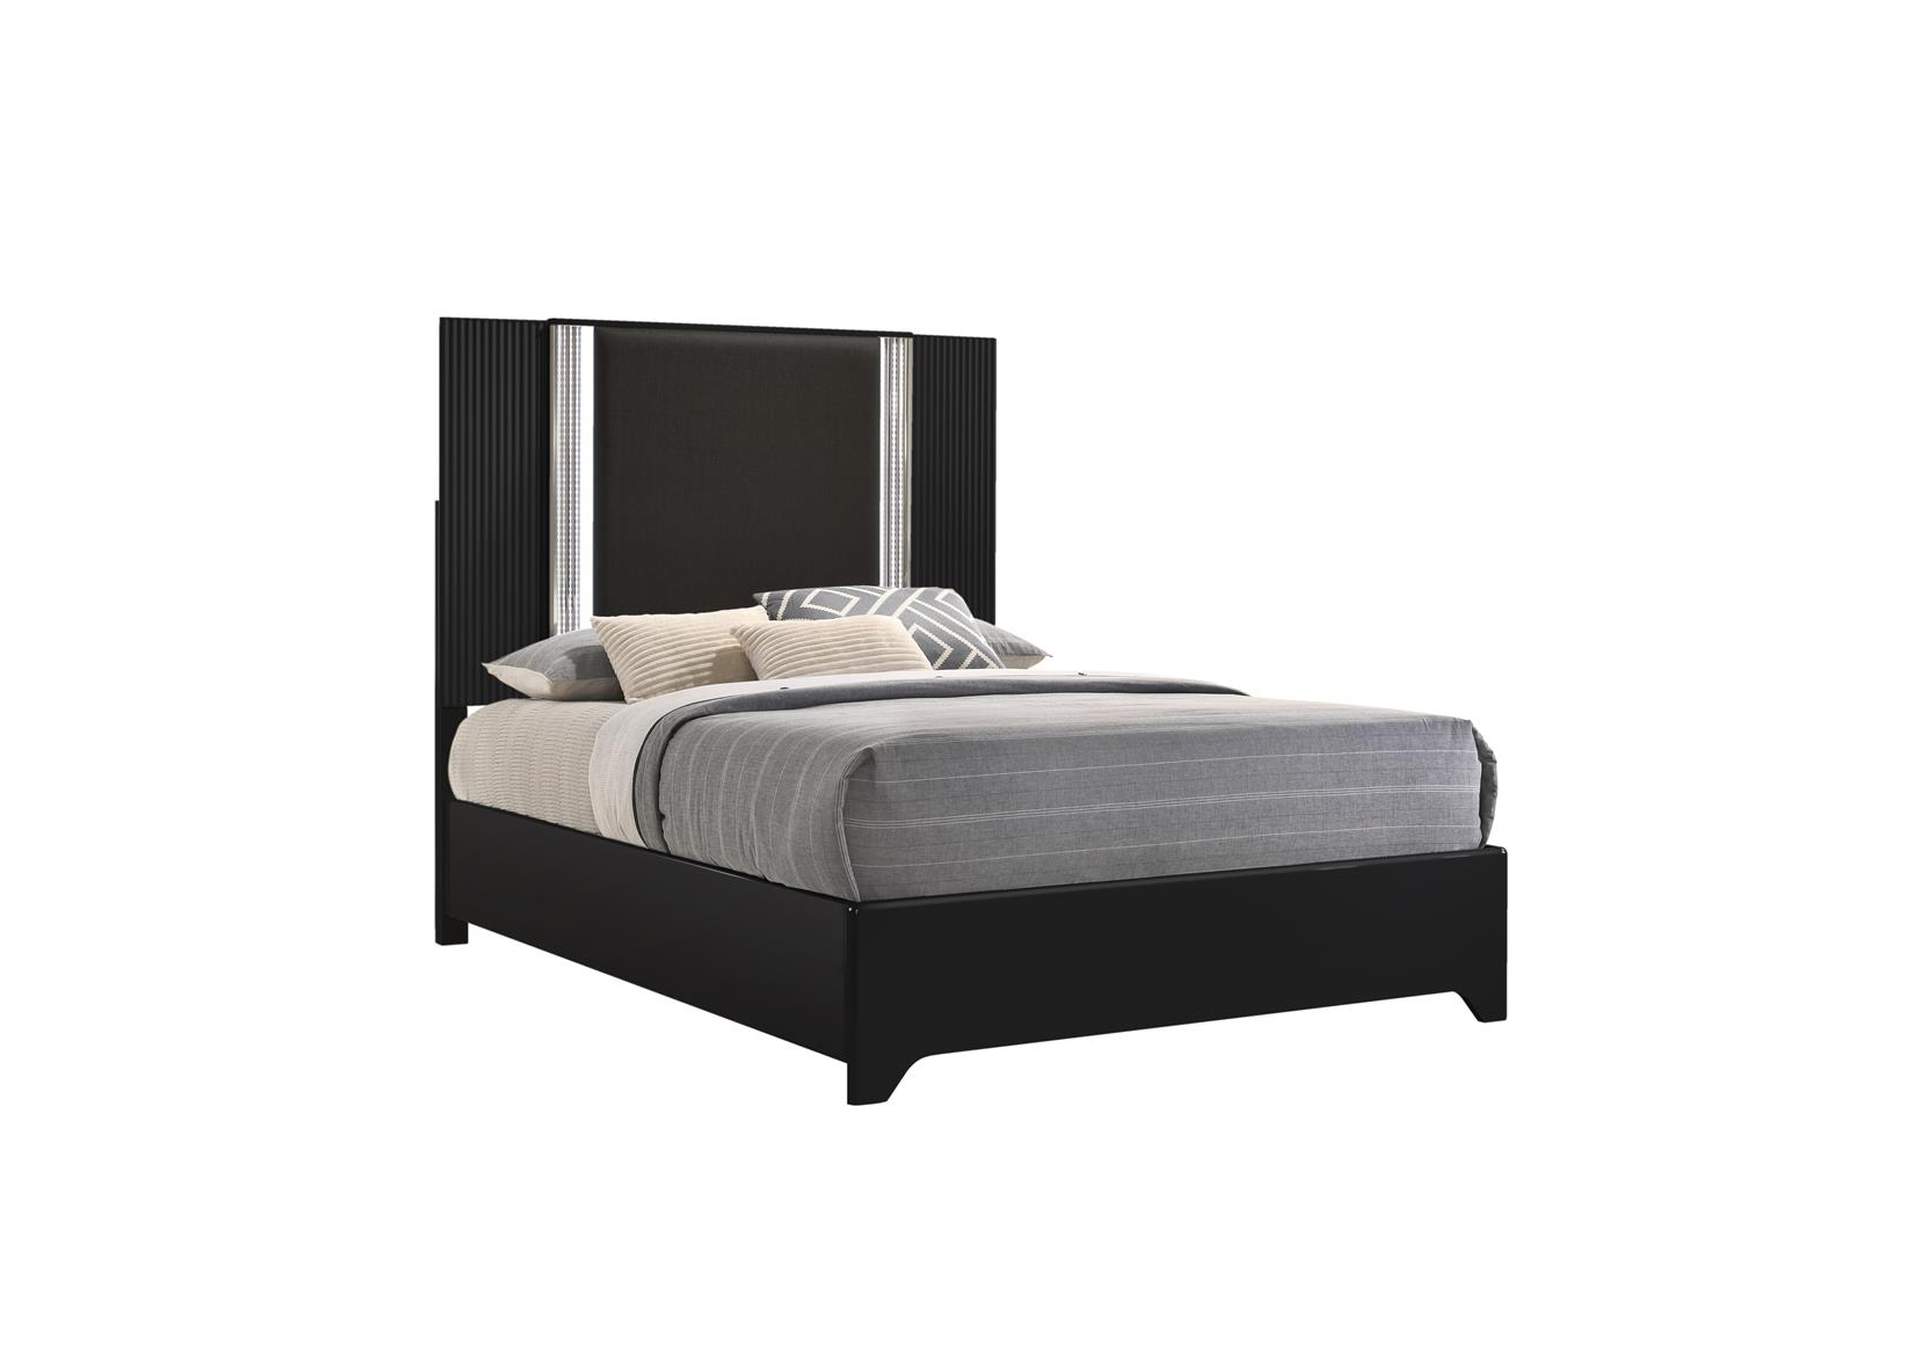 Aspen Black Queen Bed,Global Furniture USA